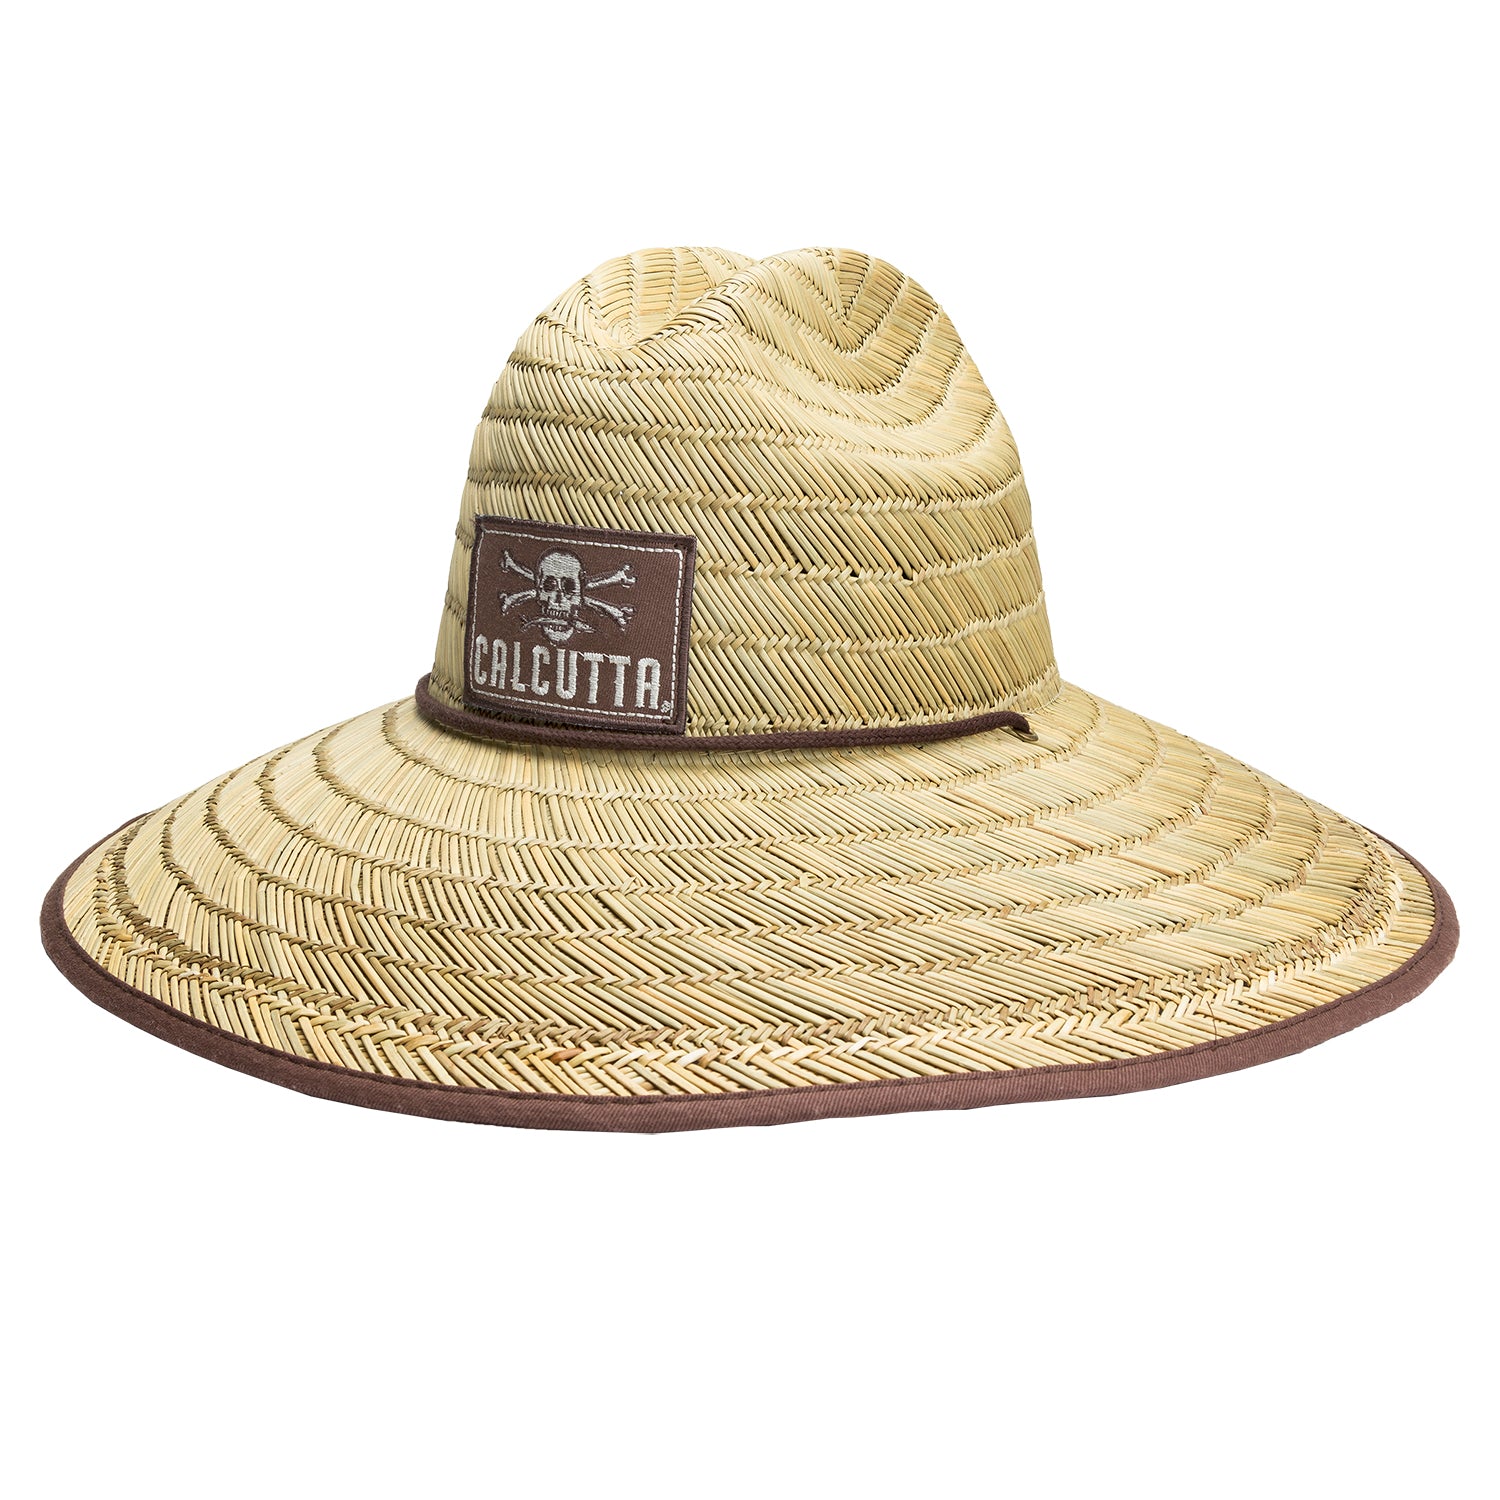 Calcutta BR209335 Straw Hat with Chin Strap One Size